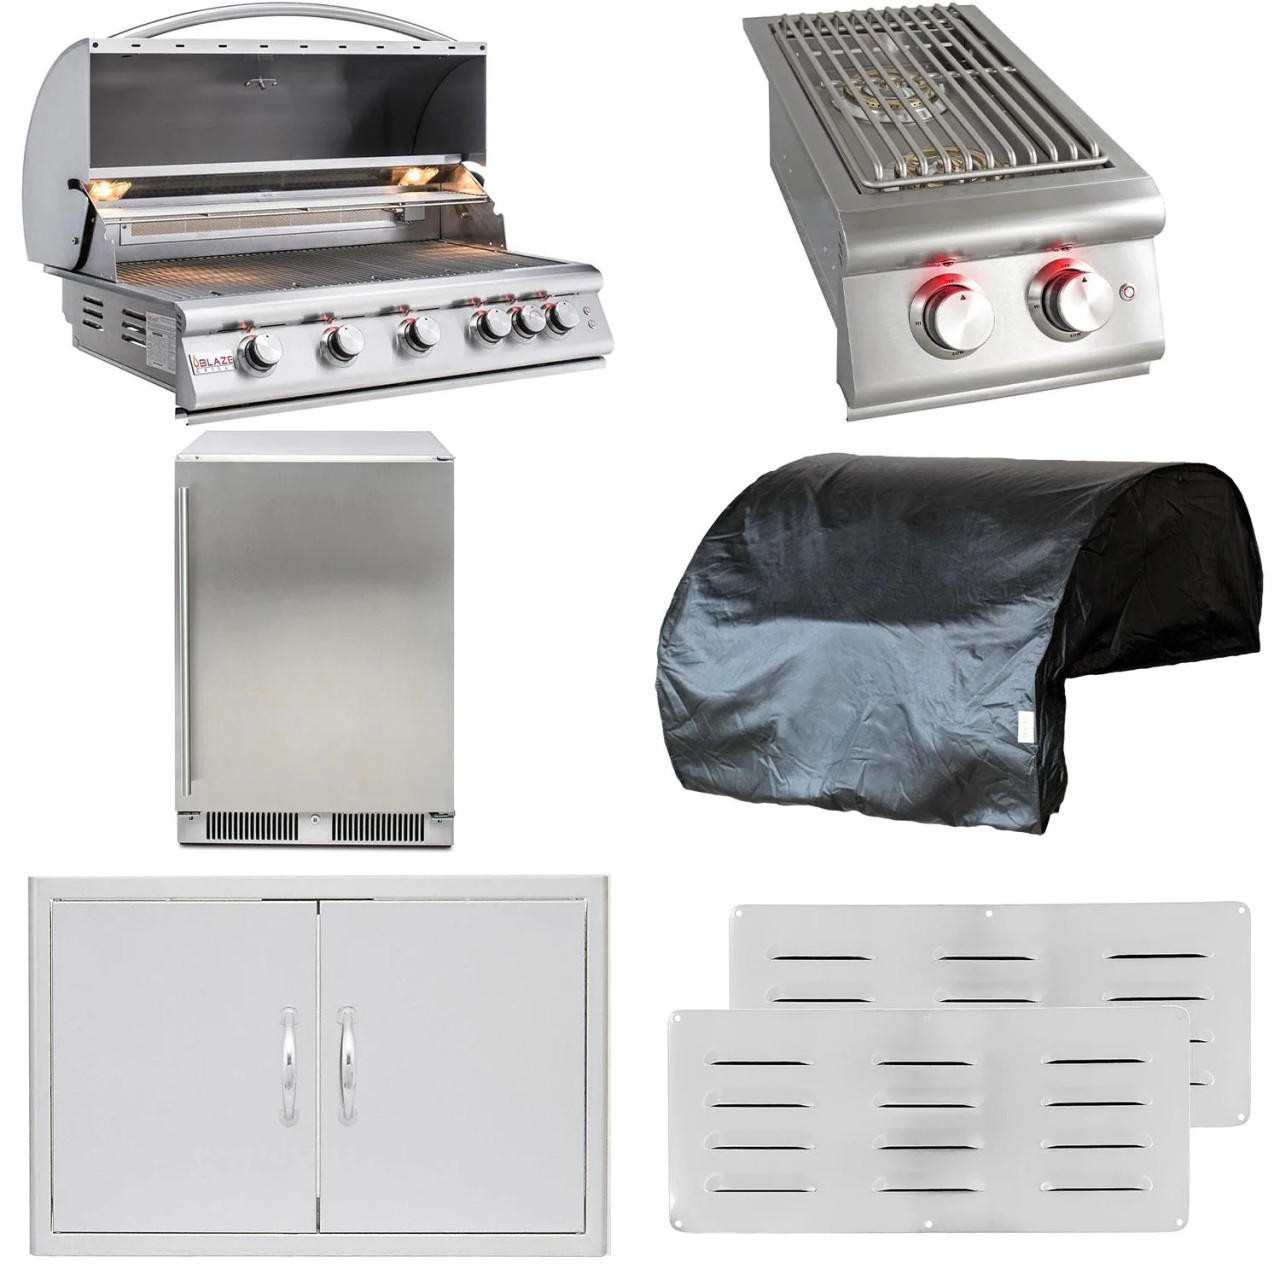 https://cdn11.bigcommerce.com/s-8gb6rhnk3s/images/stencil/1280x1280/products/719/4653/blaze-grills-blaze-premium-lte-7-piece-gas-outdoor-kitchen-package__18836.1676151945.jpg?c=1